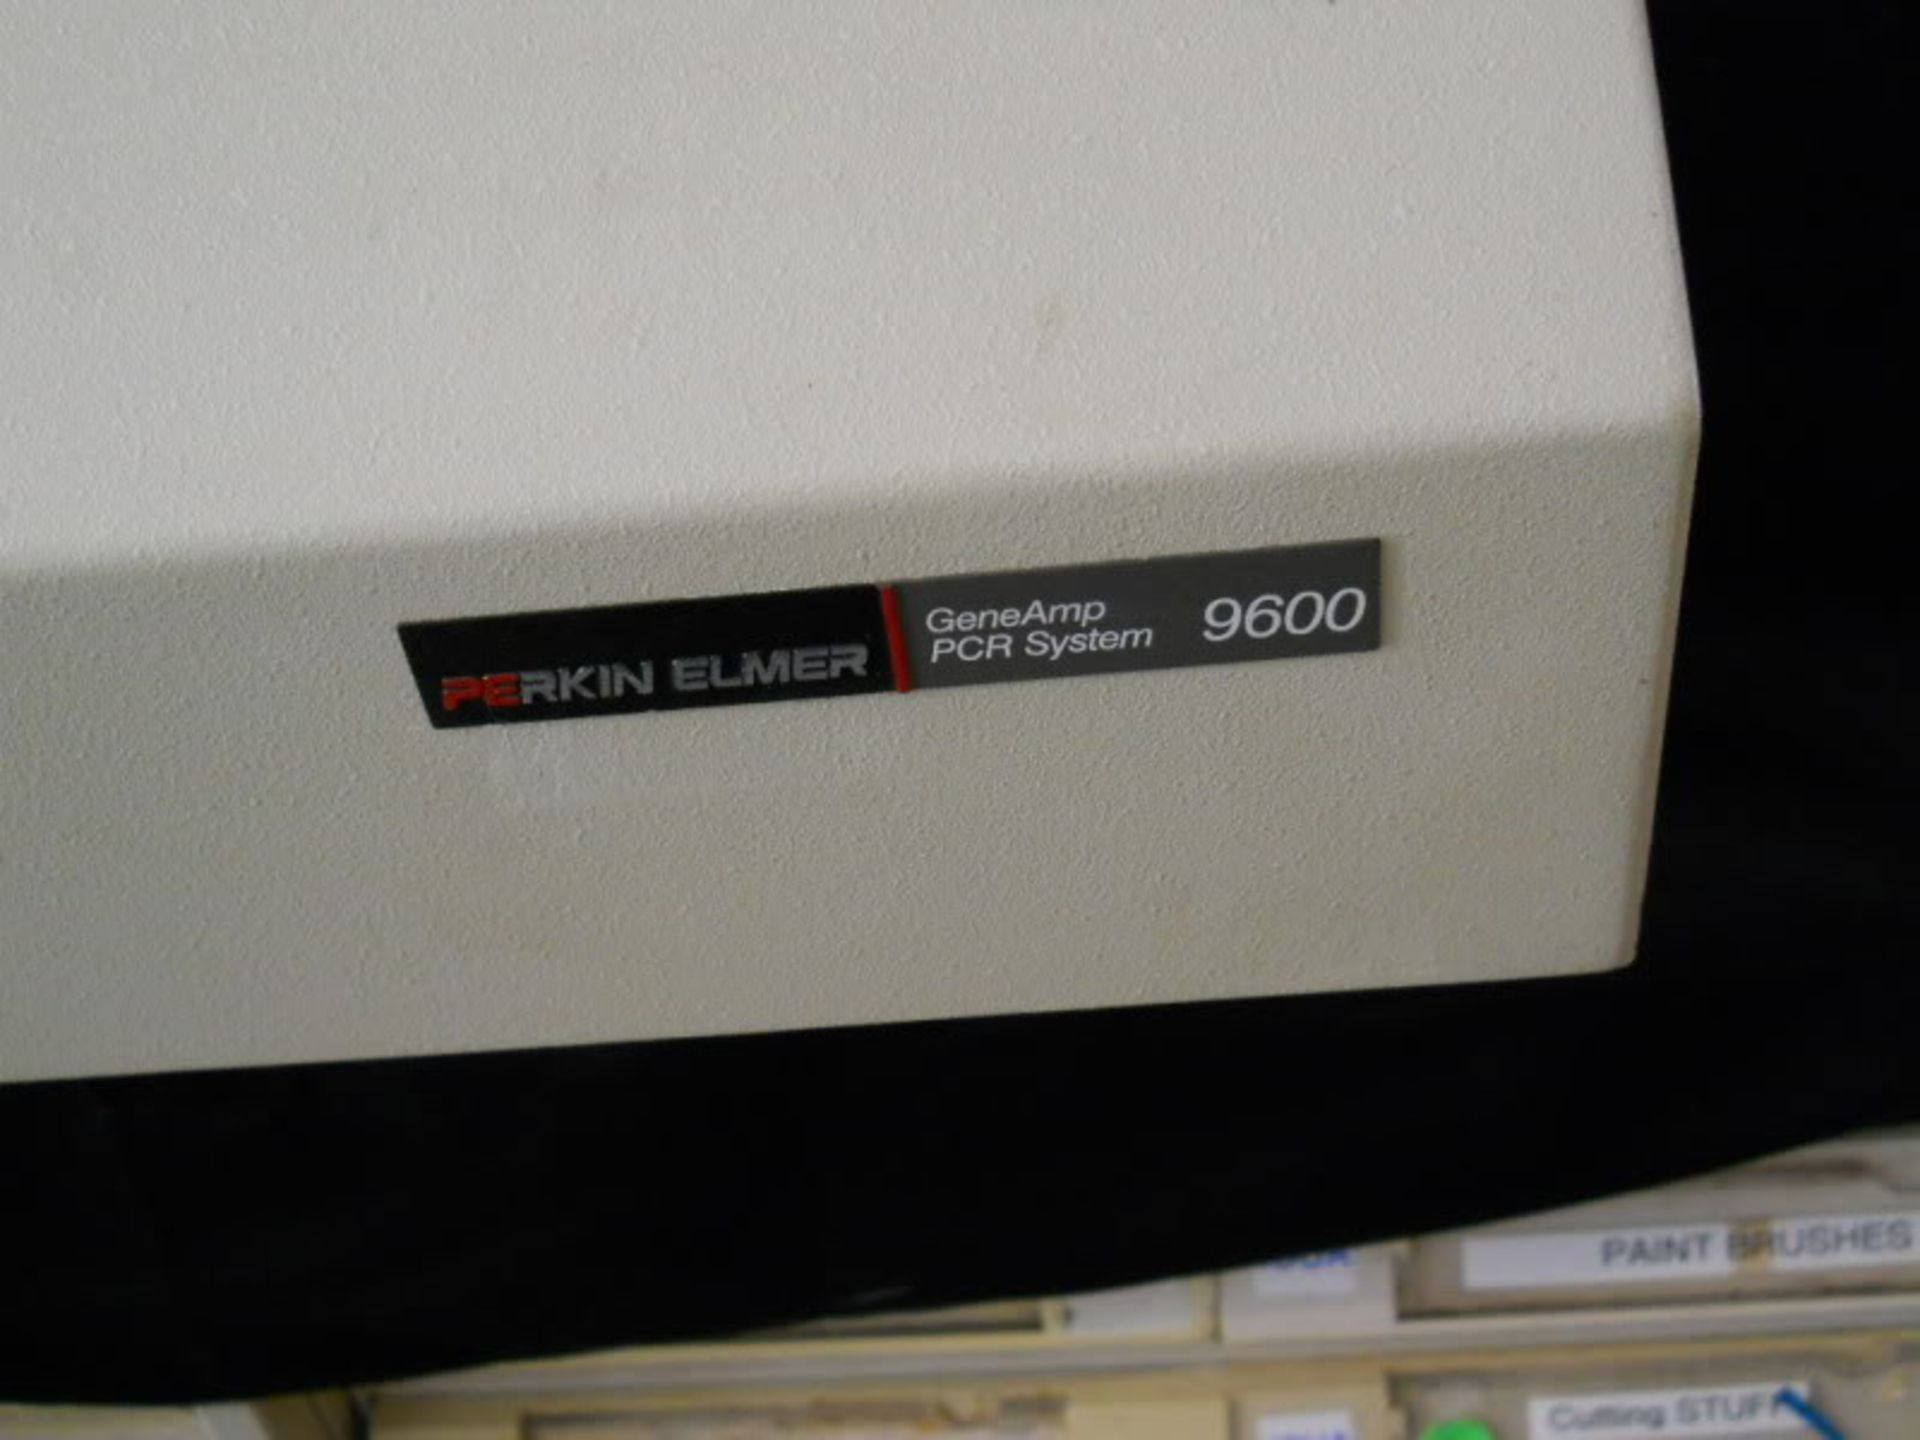 Perkin Elmer GeneAmp PCR System 9600 (D), Qty 1, 221038179154 - Image 5 of 12